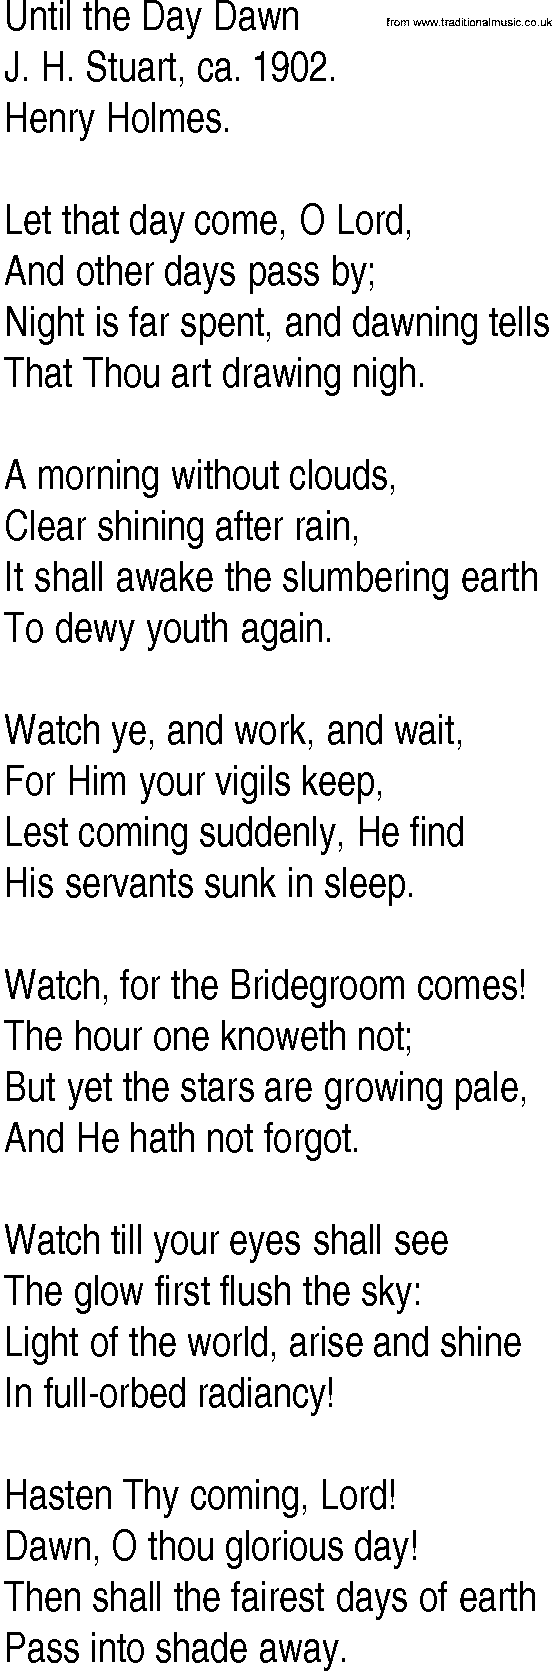 Hymn and Gospel Song: Until the Day Dawn by J H Stuart ca lyrics